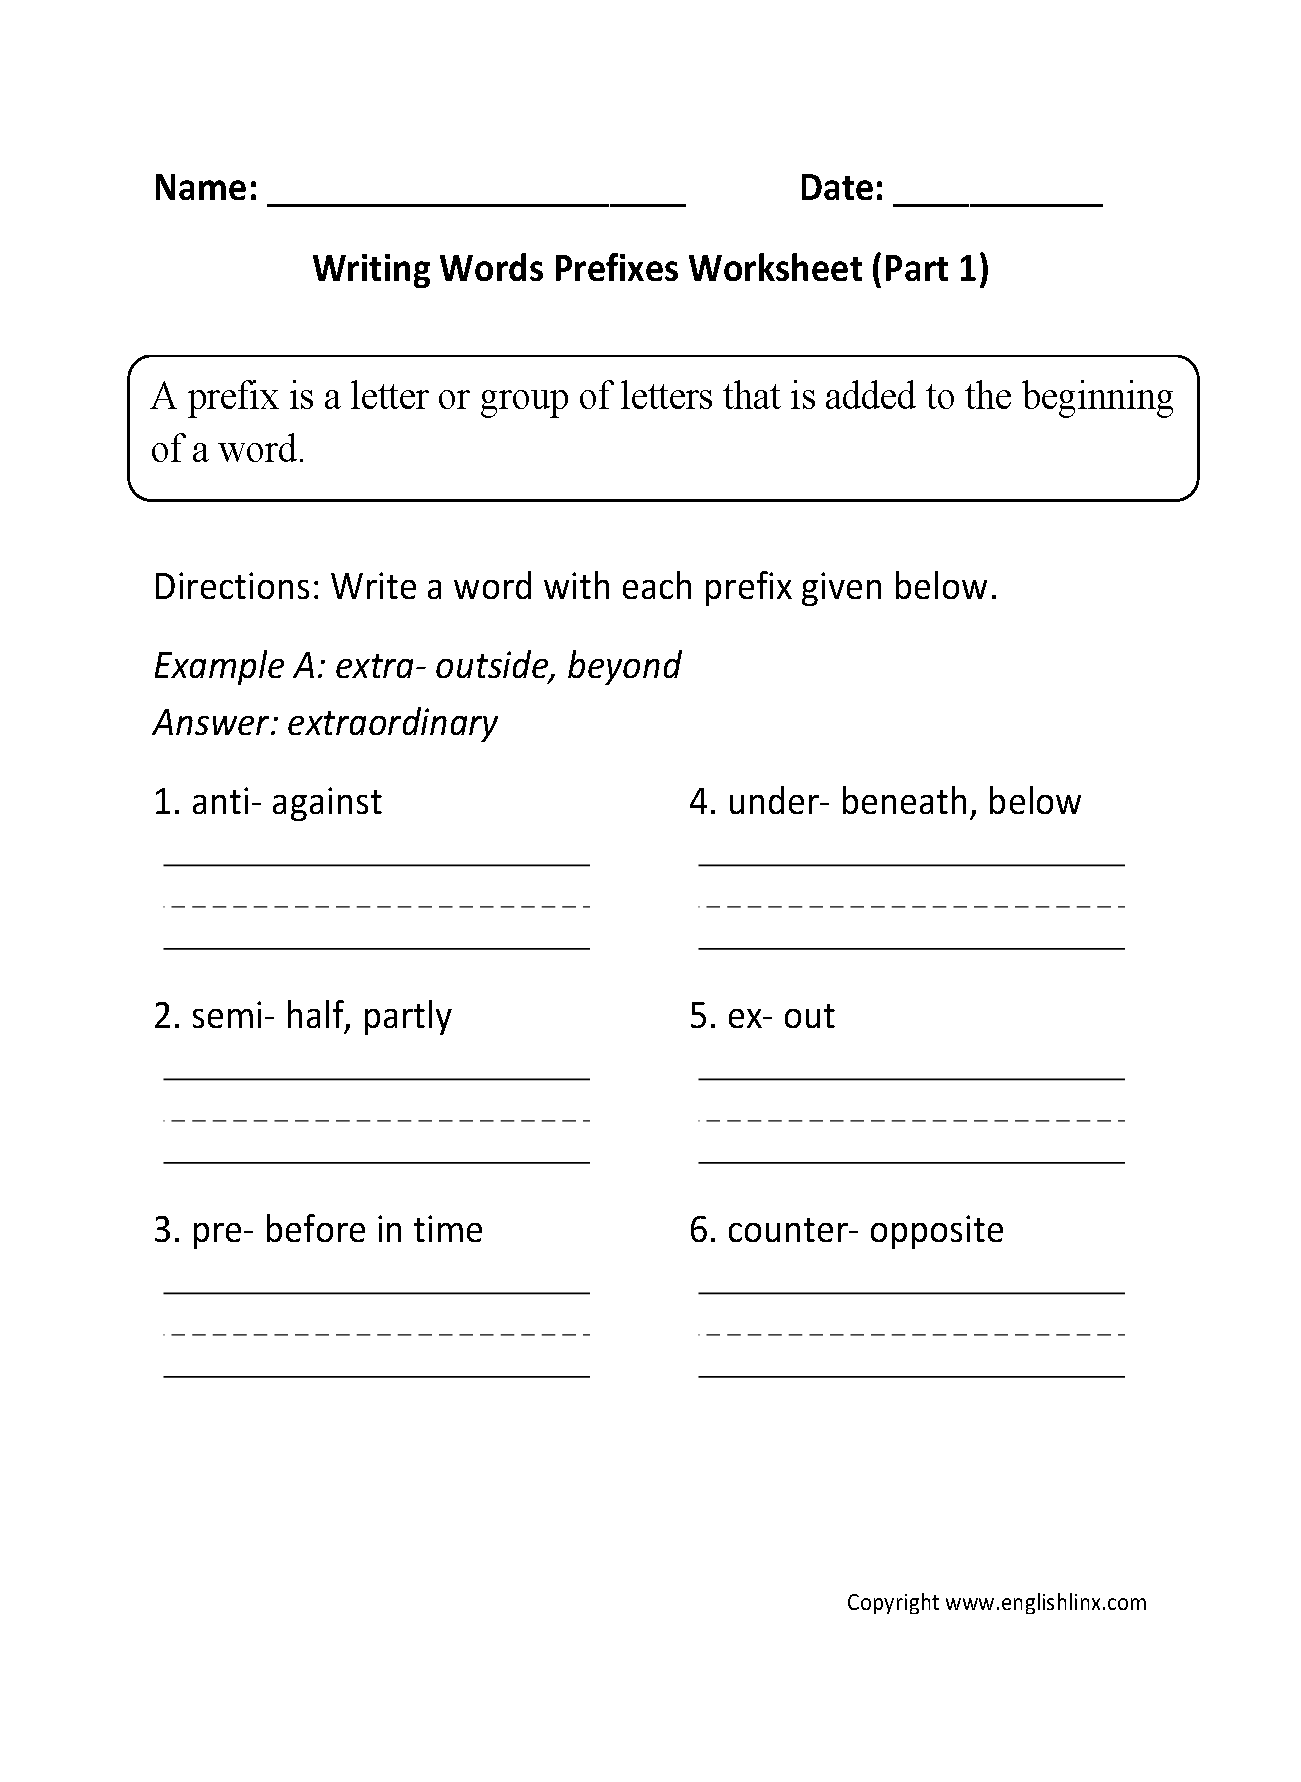 Writing Words Prefixes Worksheet Part 1